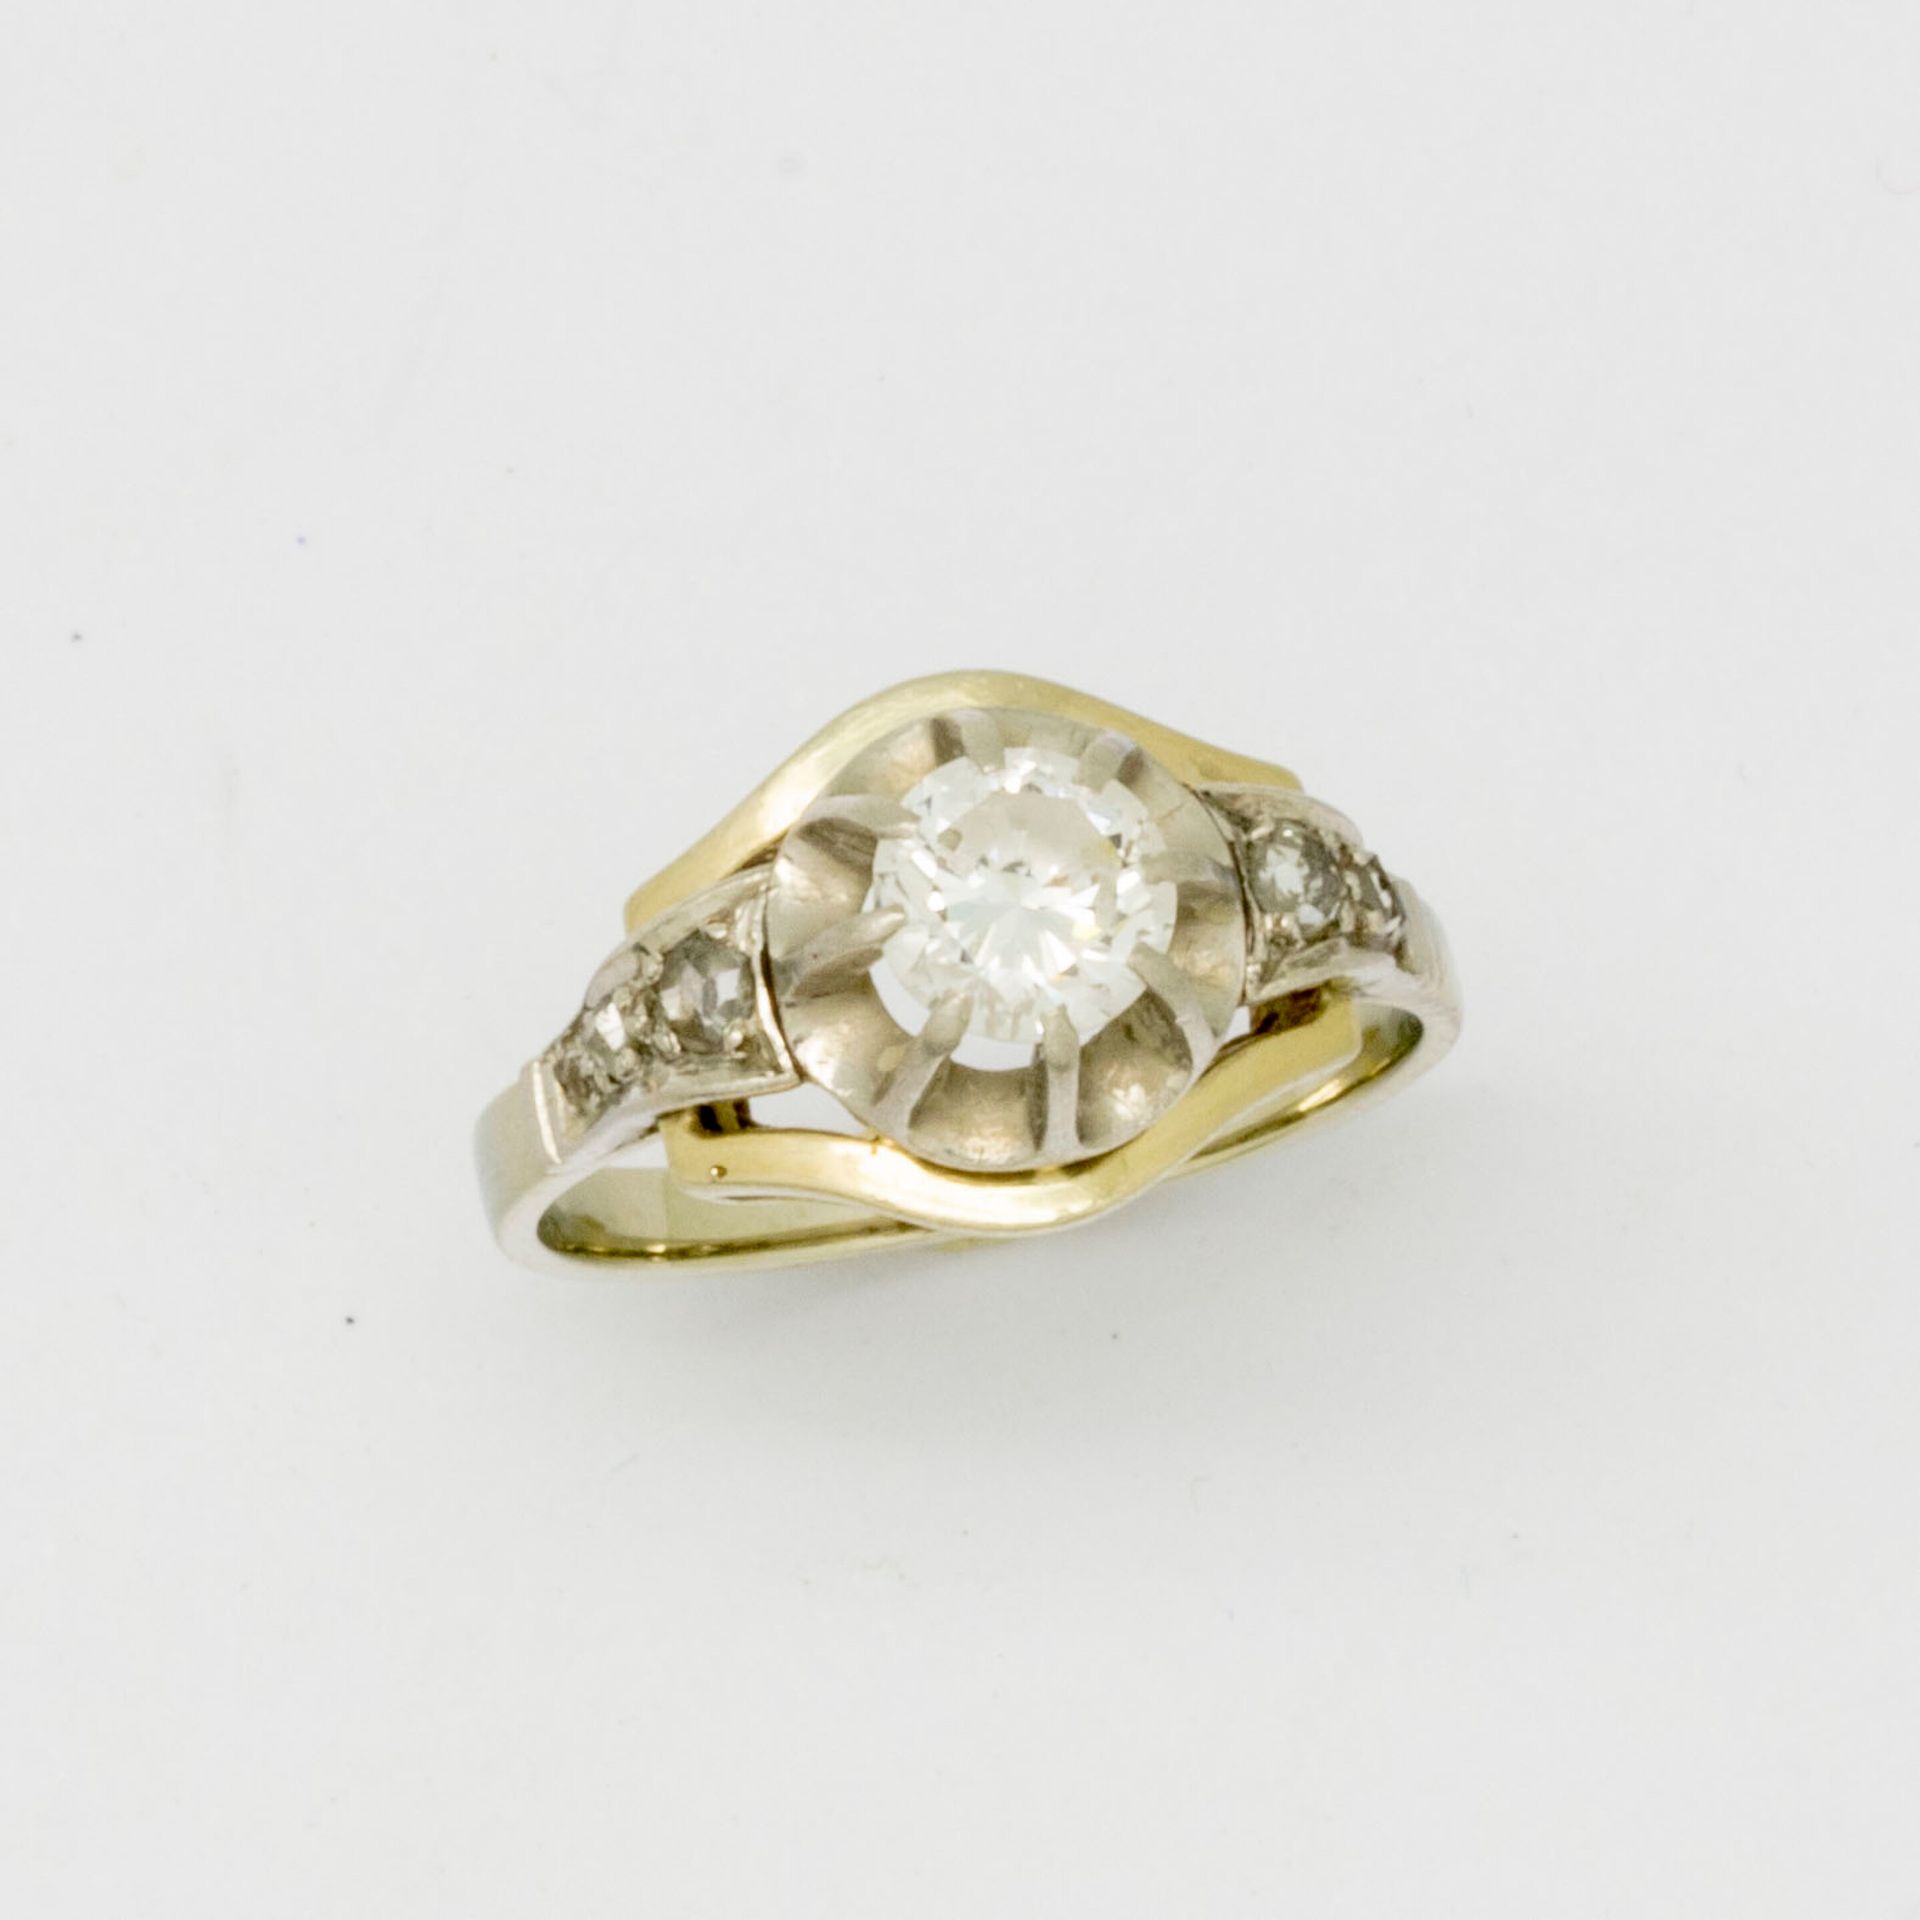 Null 18K白金戒指，镶嵌了一颗0.6克拉的钻石和小钻石。约1930/50年

重量：3.70克。